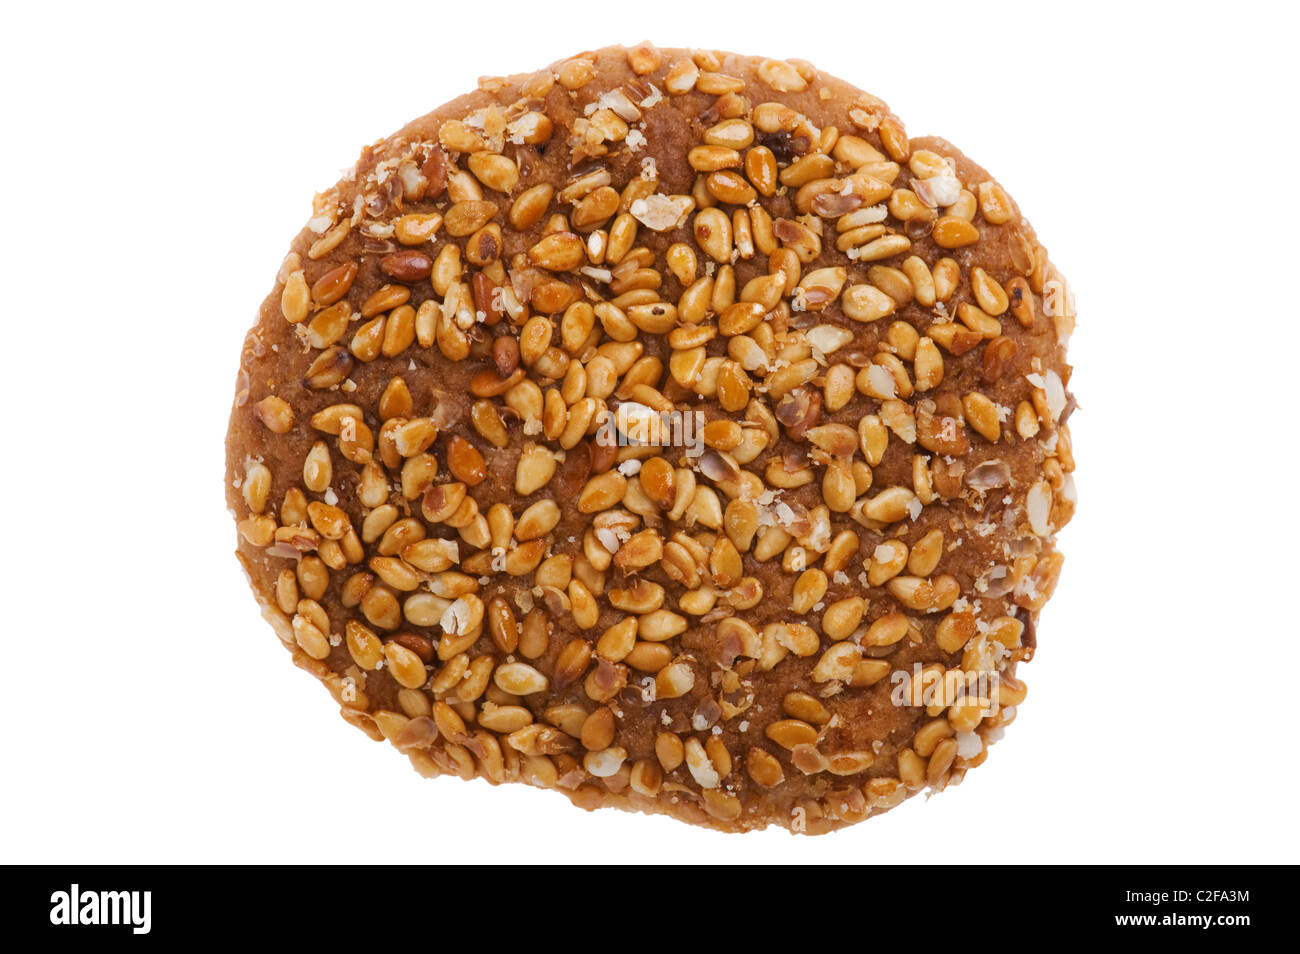 Objekt auf weiß - Cookies mit Sesam Stockfoto